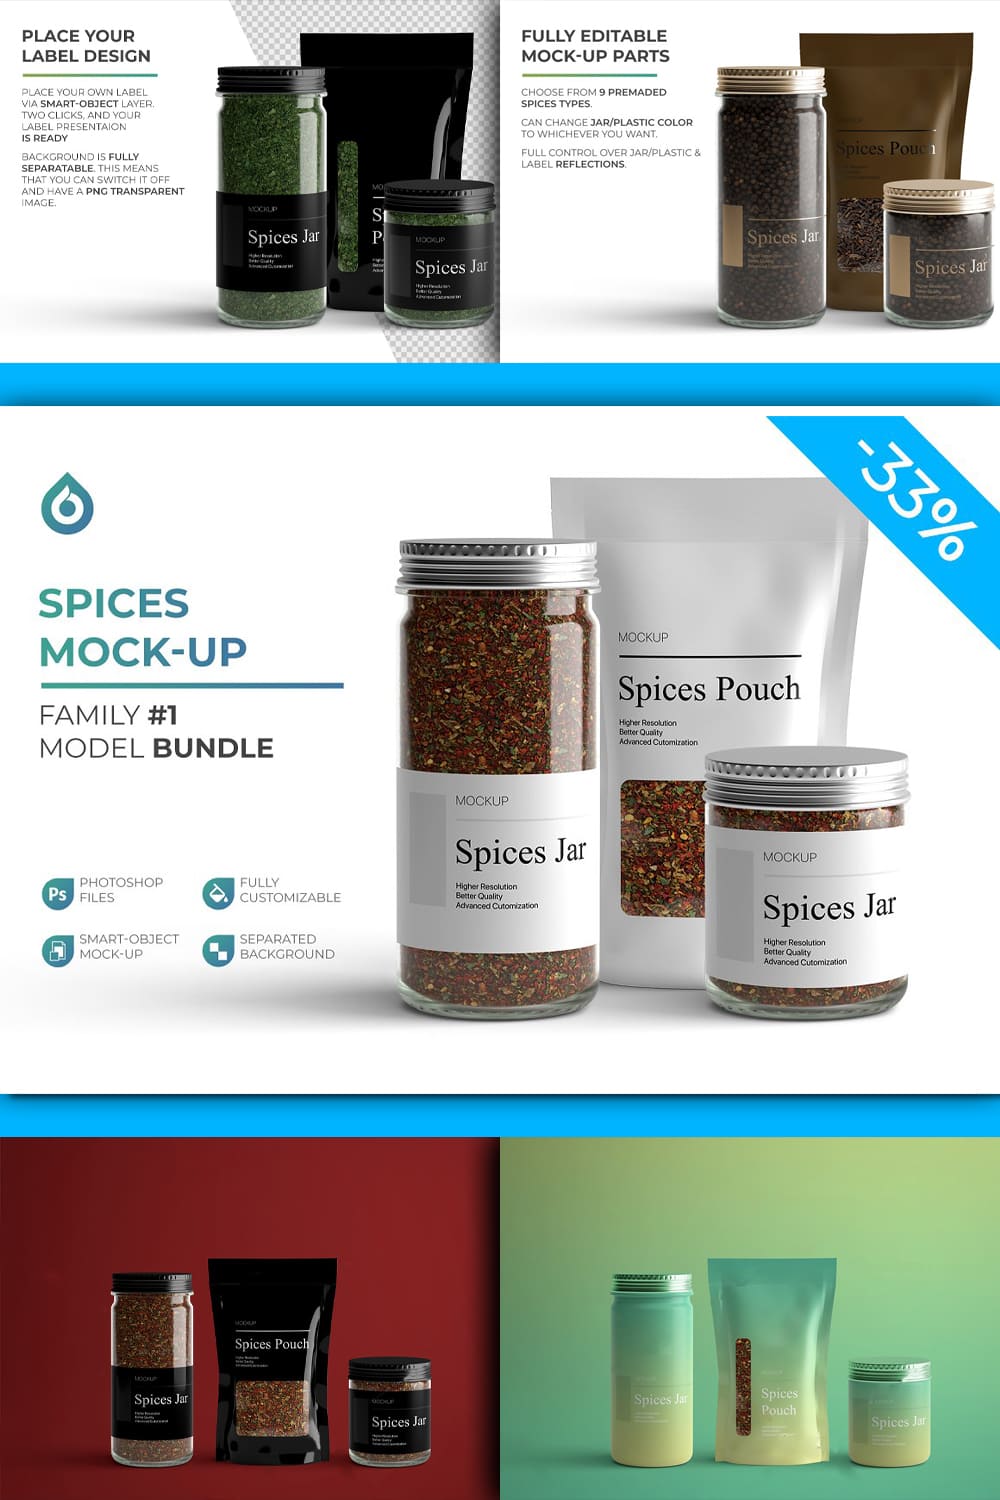 Spices Mockup - Pinterest.